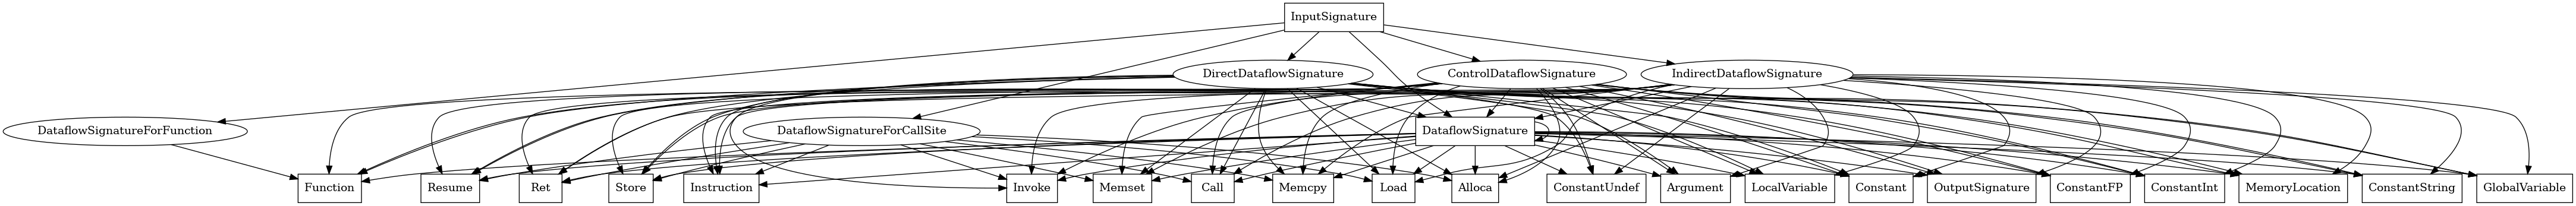 Entity-relationship diagram for InputSignature nodes